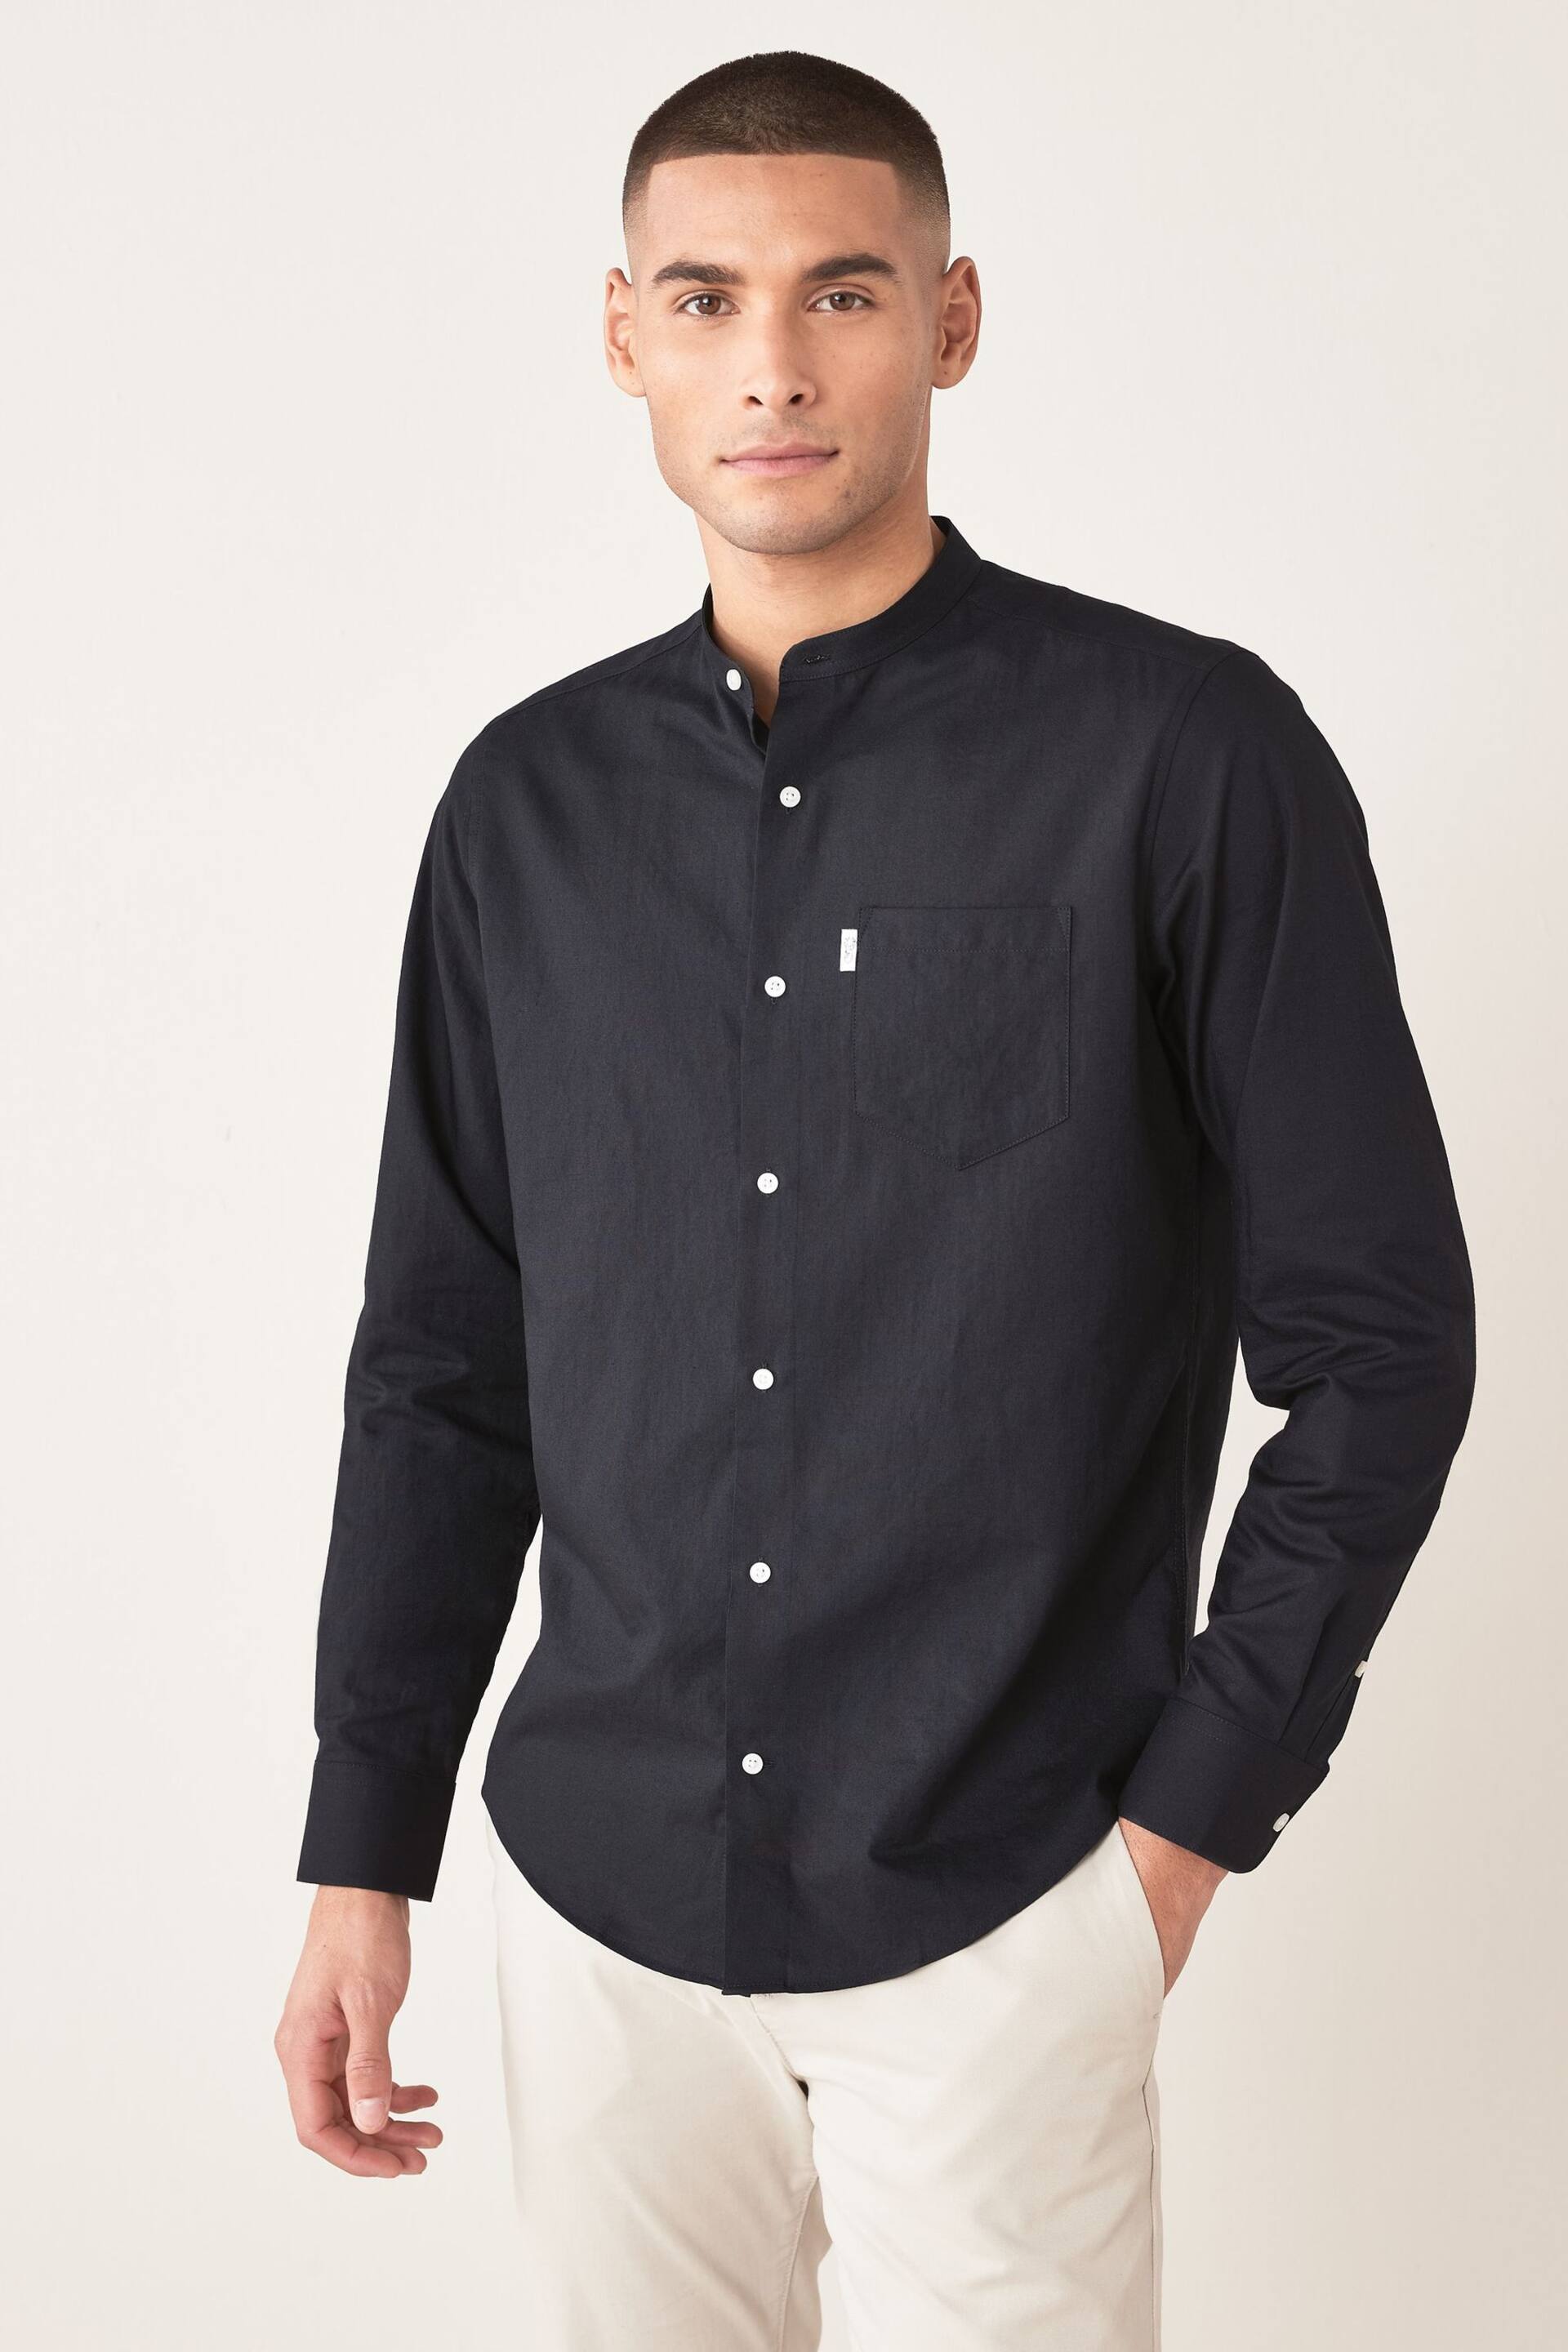 Black Grandad Collar Shirt - Image 1 of 8